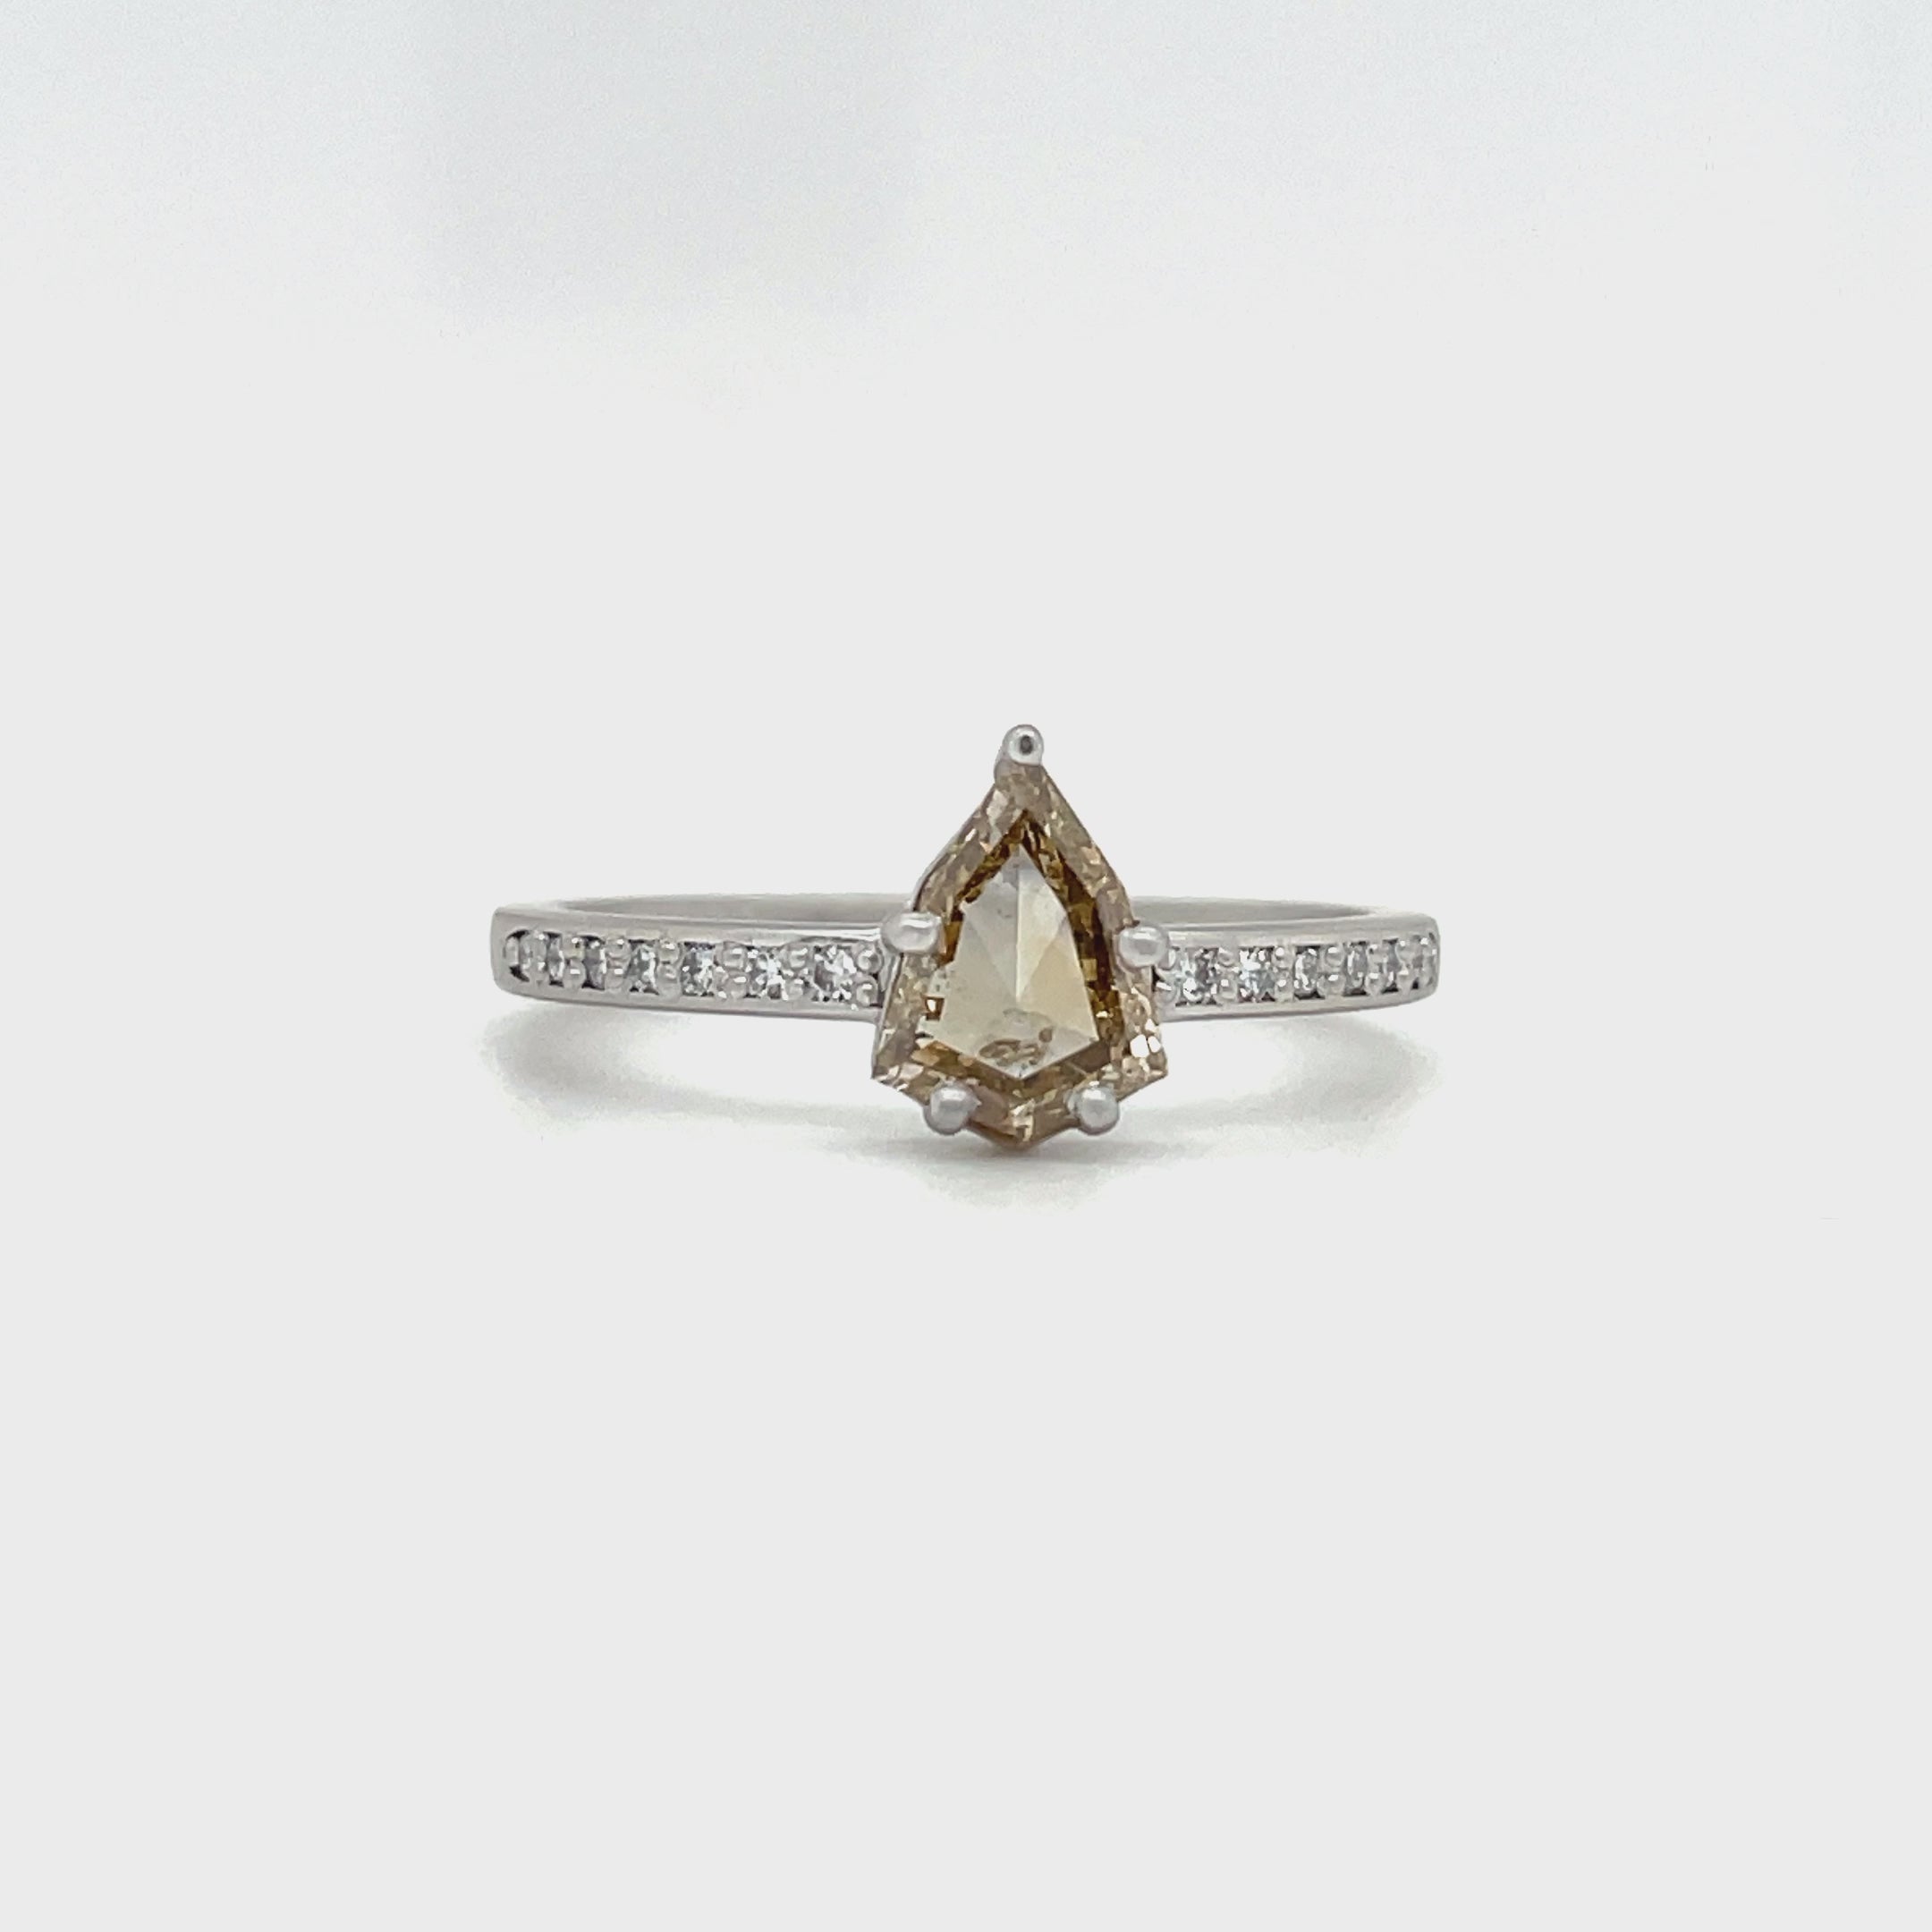 Platinum ring with shield shape champagne diamond